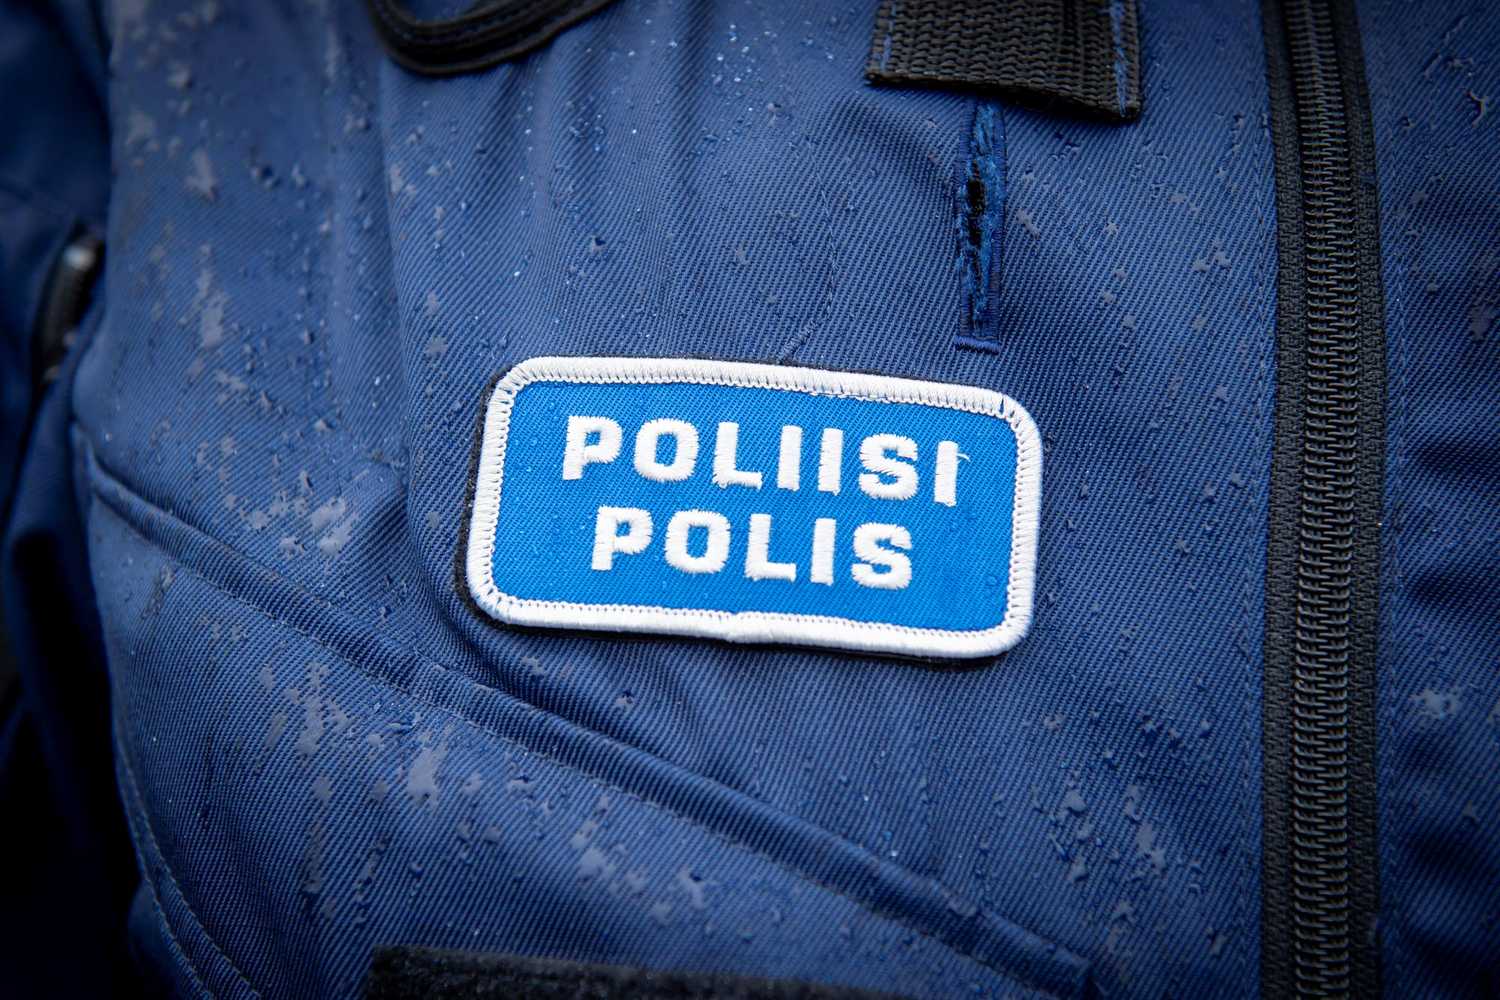 En polisbricka i en regnblöt väst.